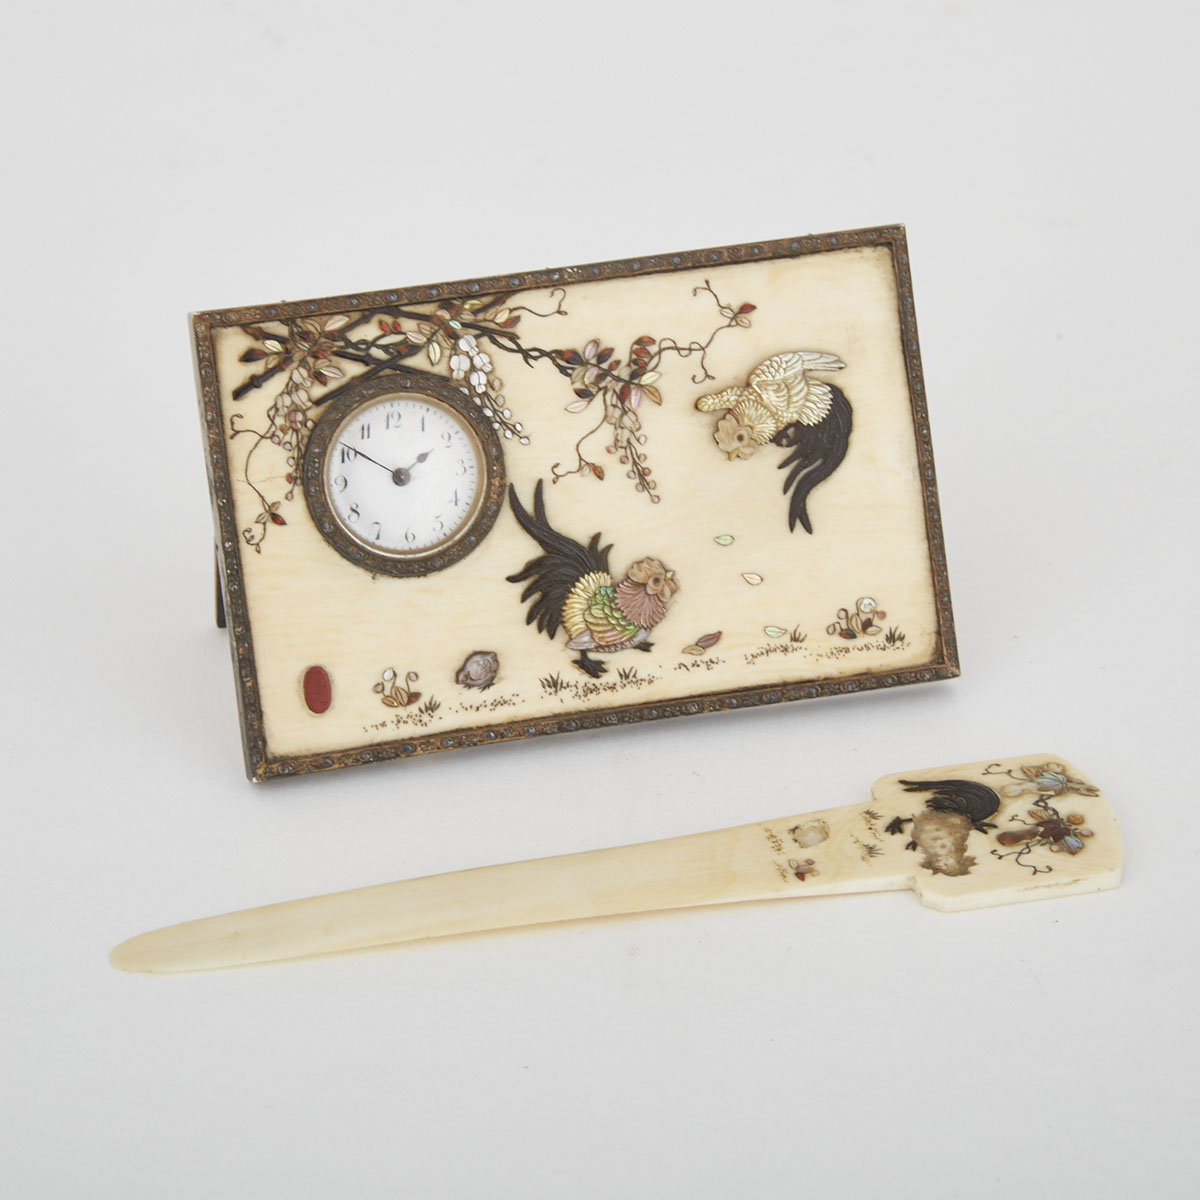 Japanese Shibayama Desk Clock and Letter Opener, c.1900